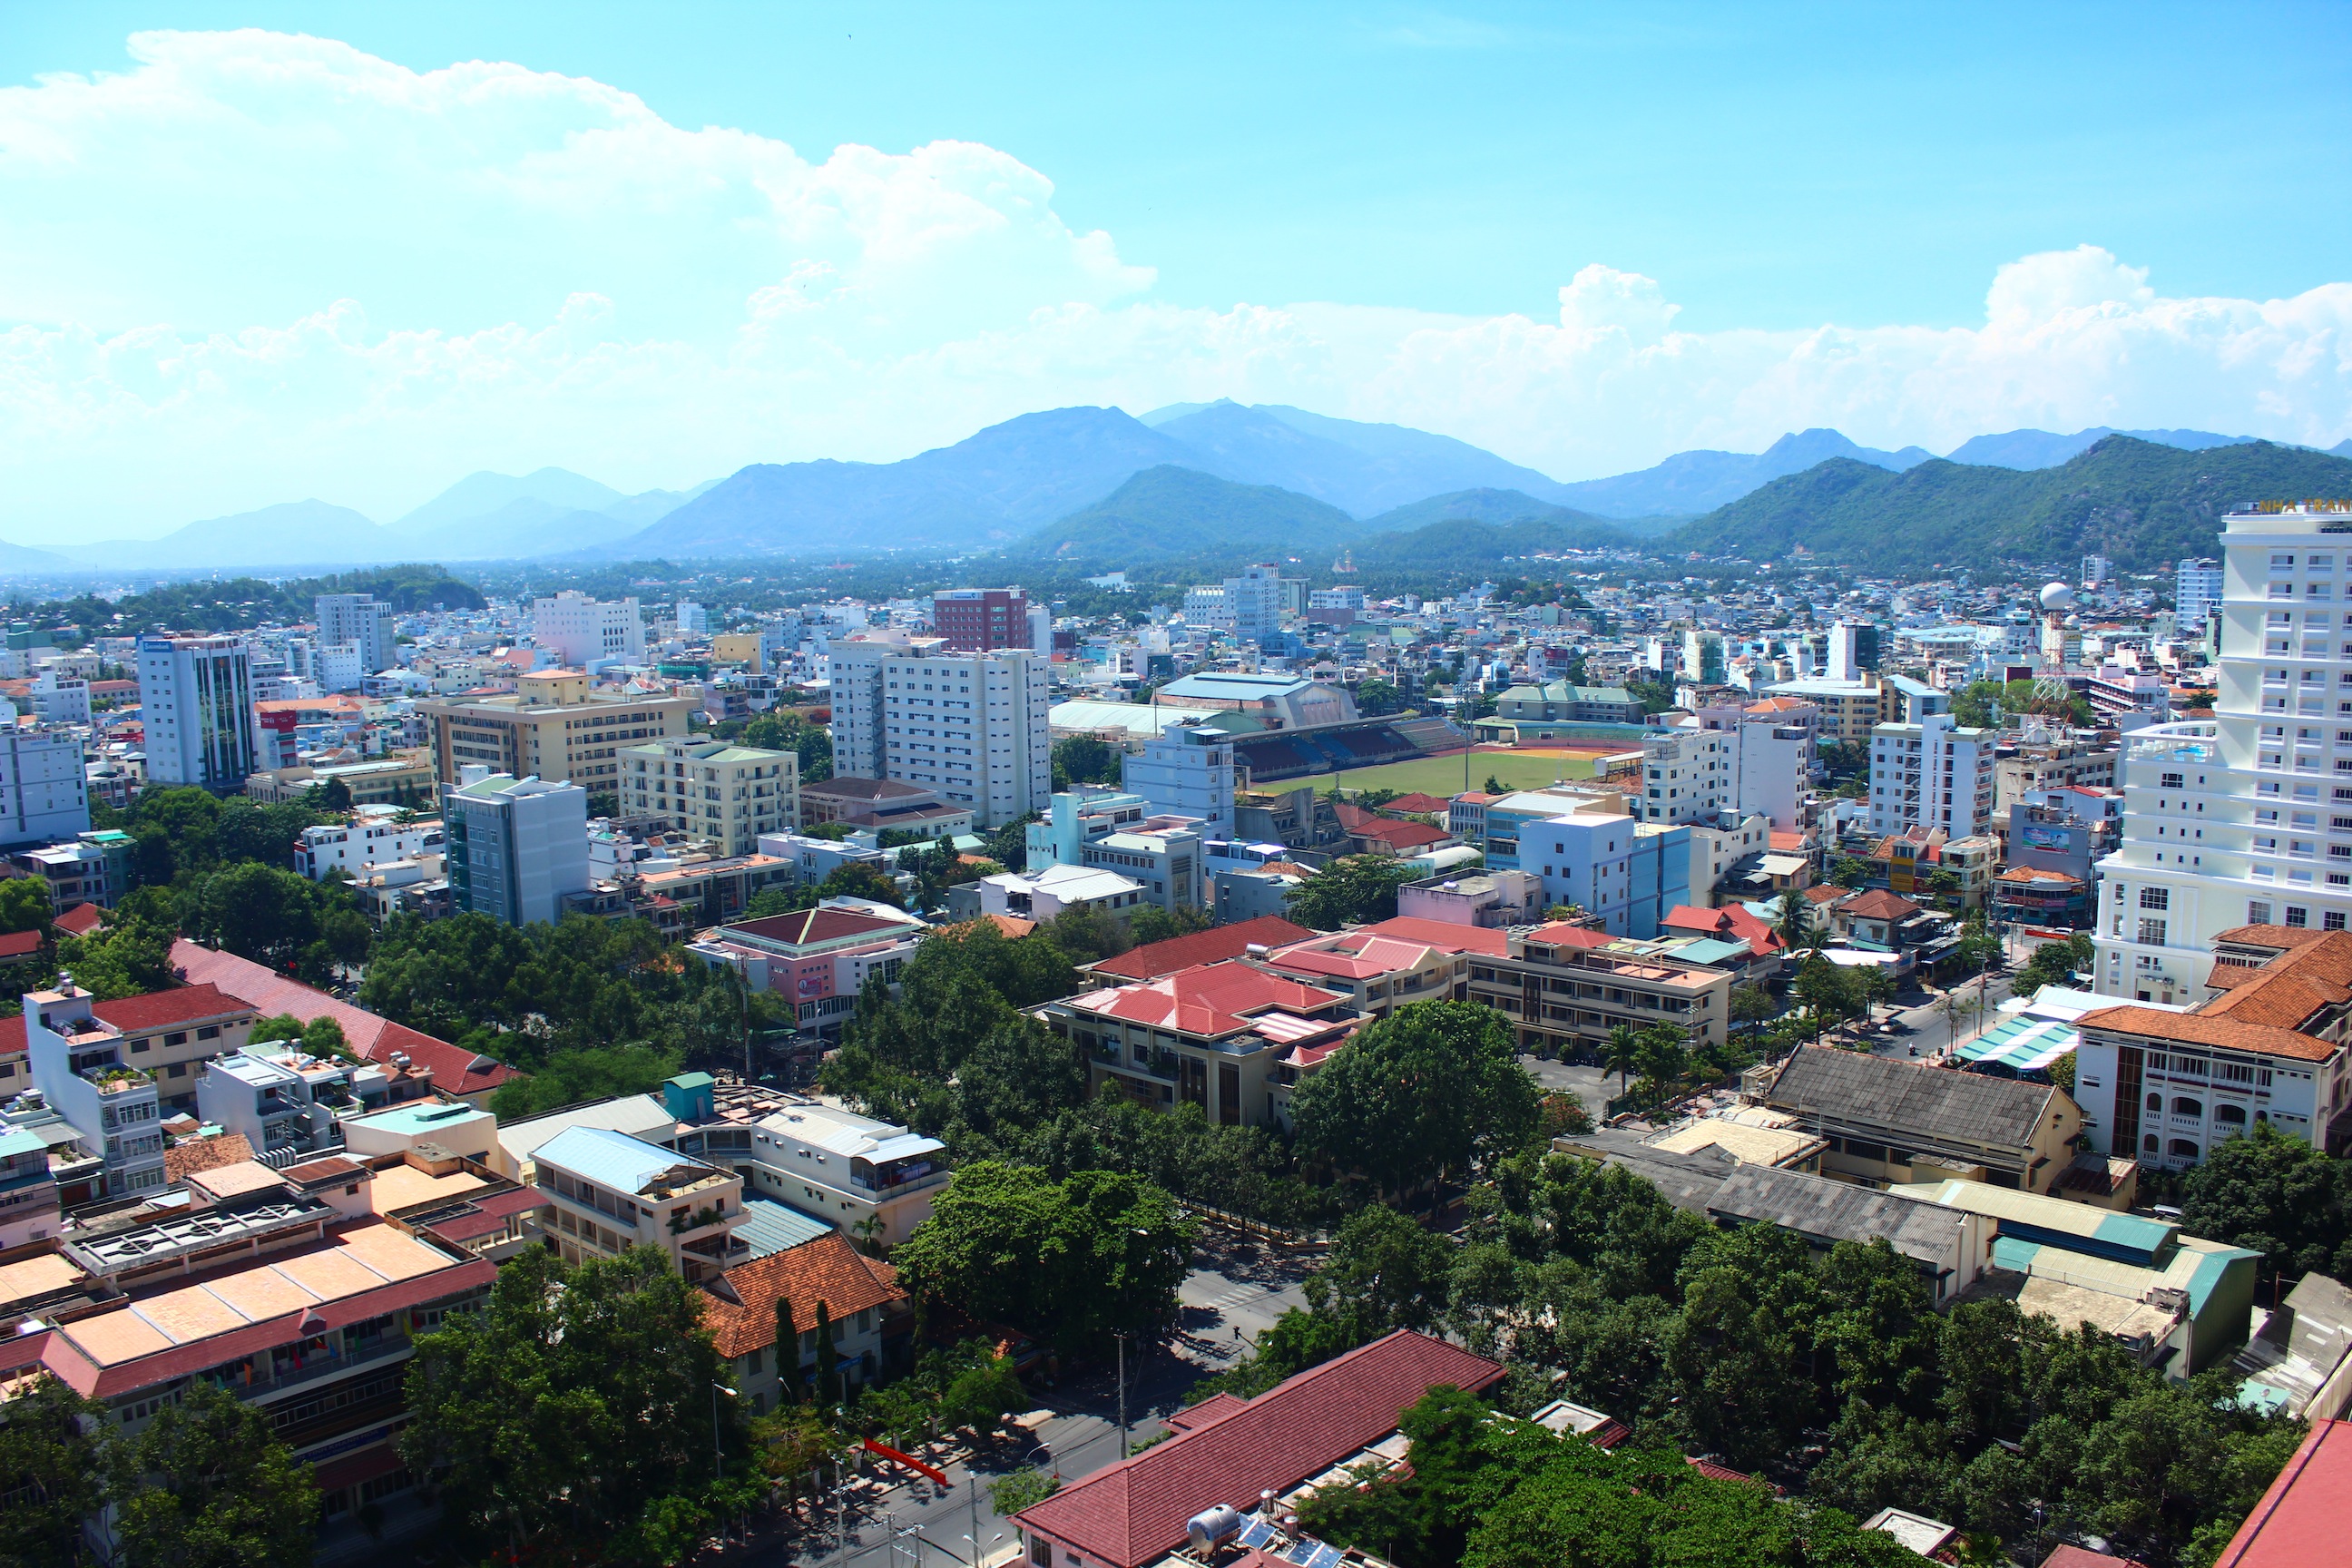 View across Nha Trang